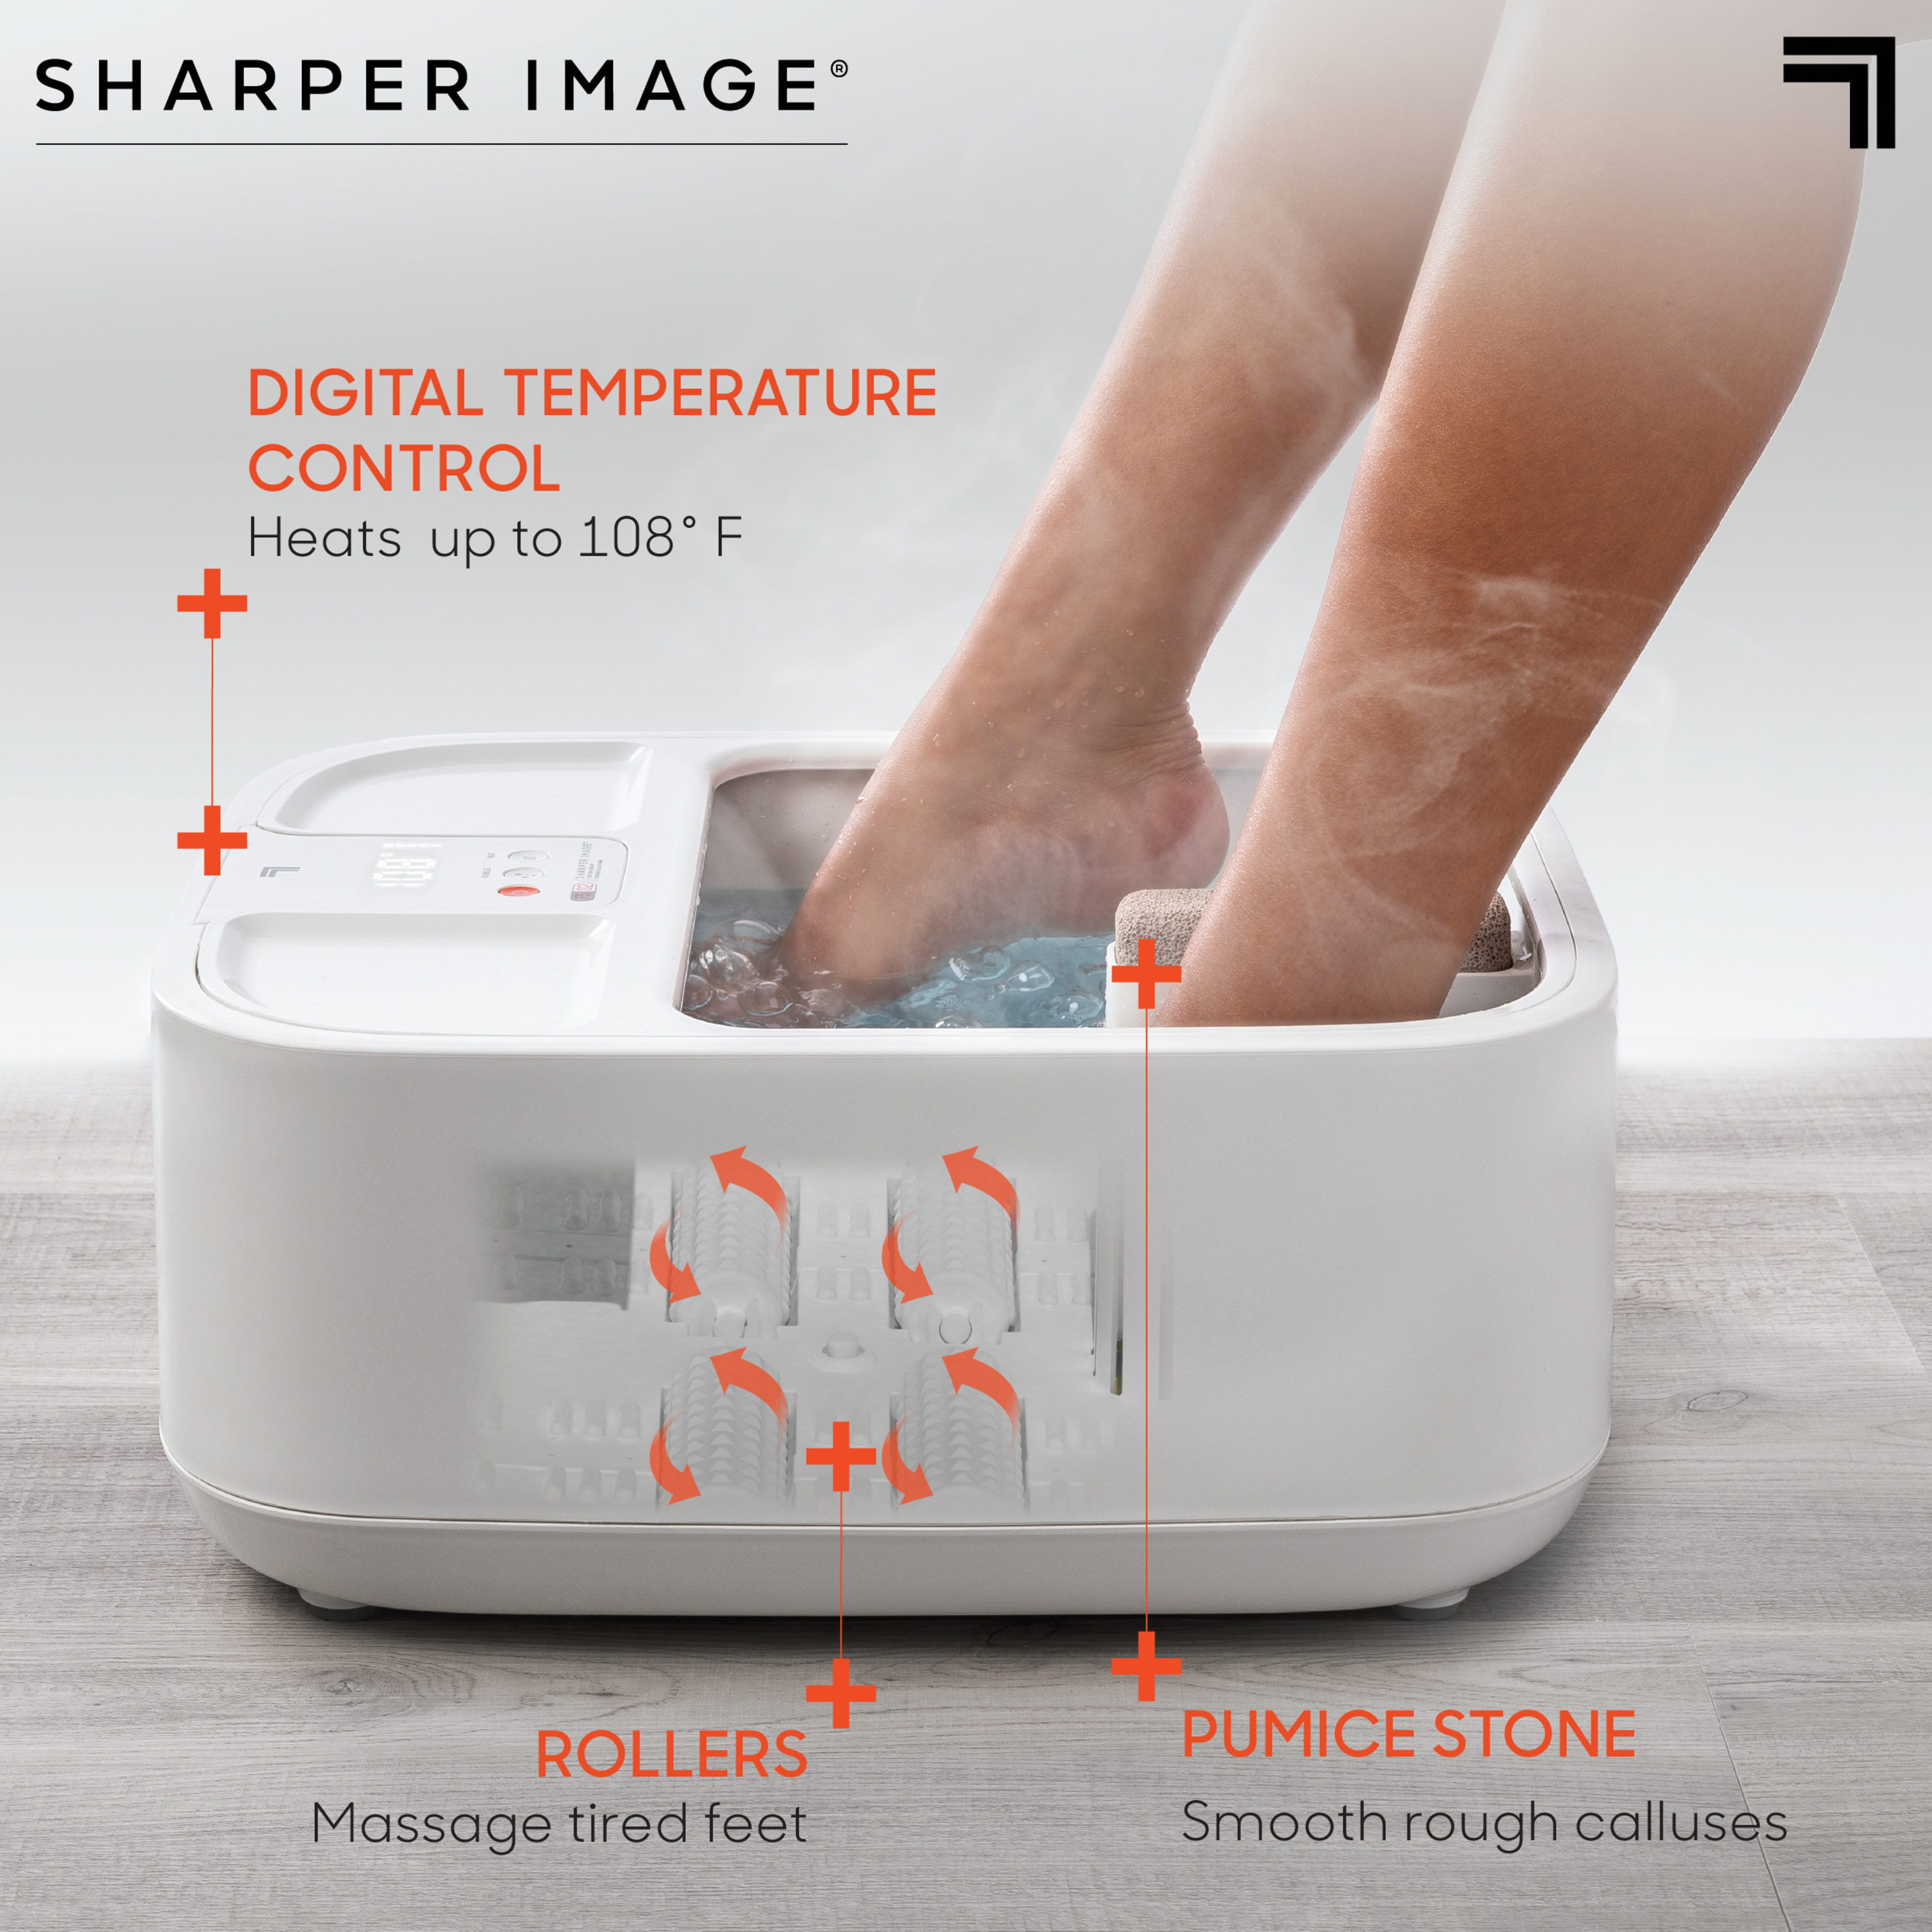 Sharper Image Manual Weighing Scale